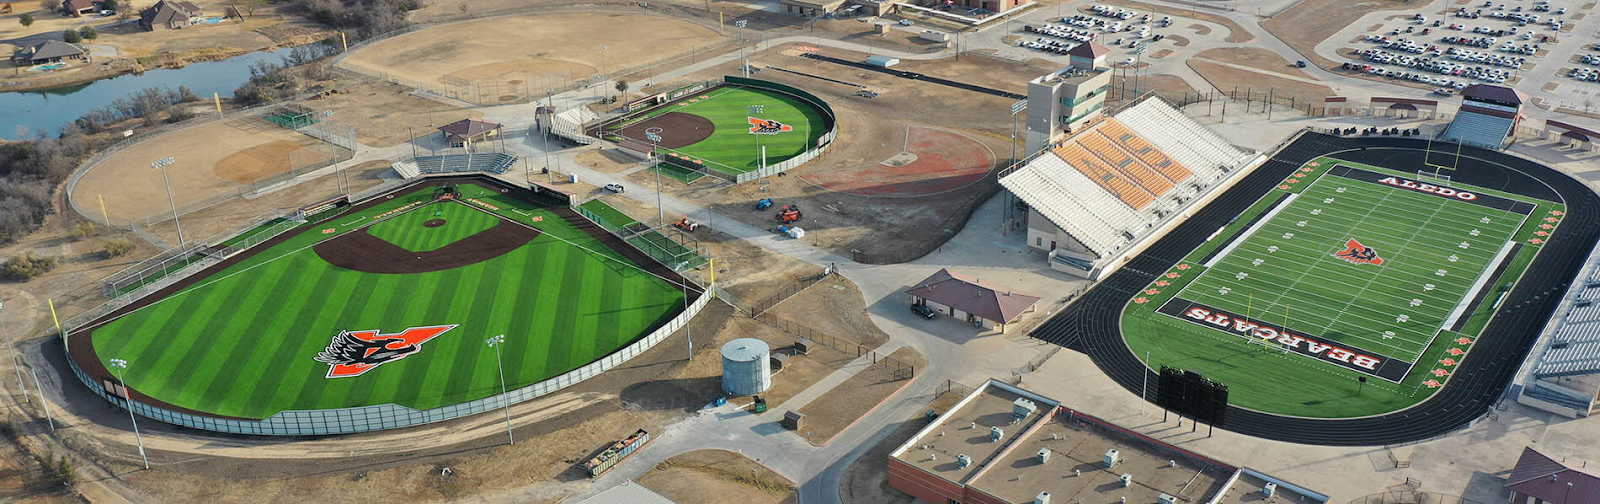 photo of Aledo High School baseball and football fields